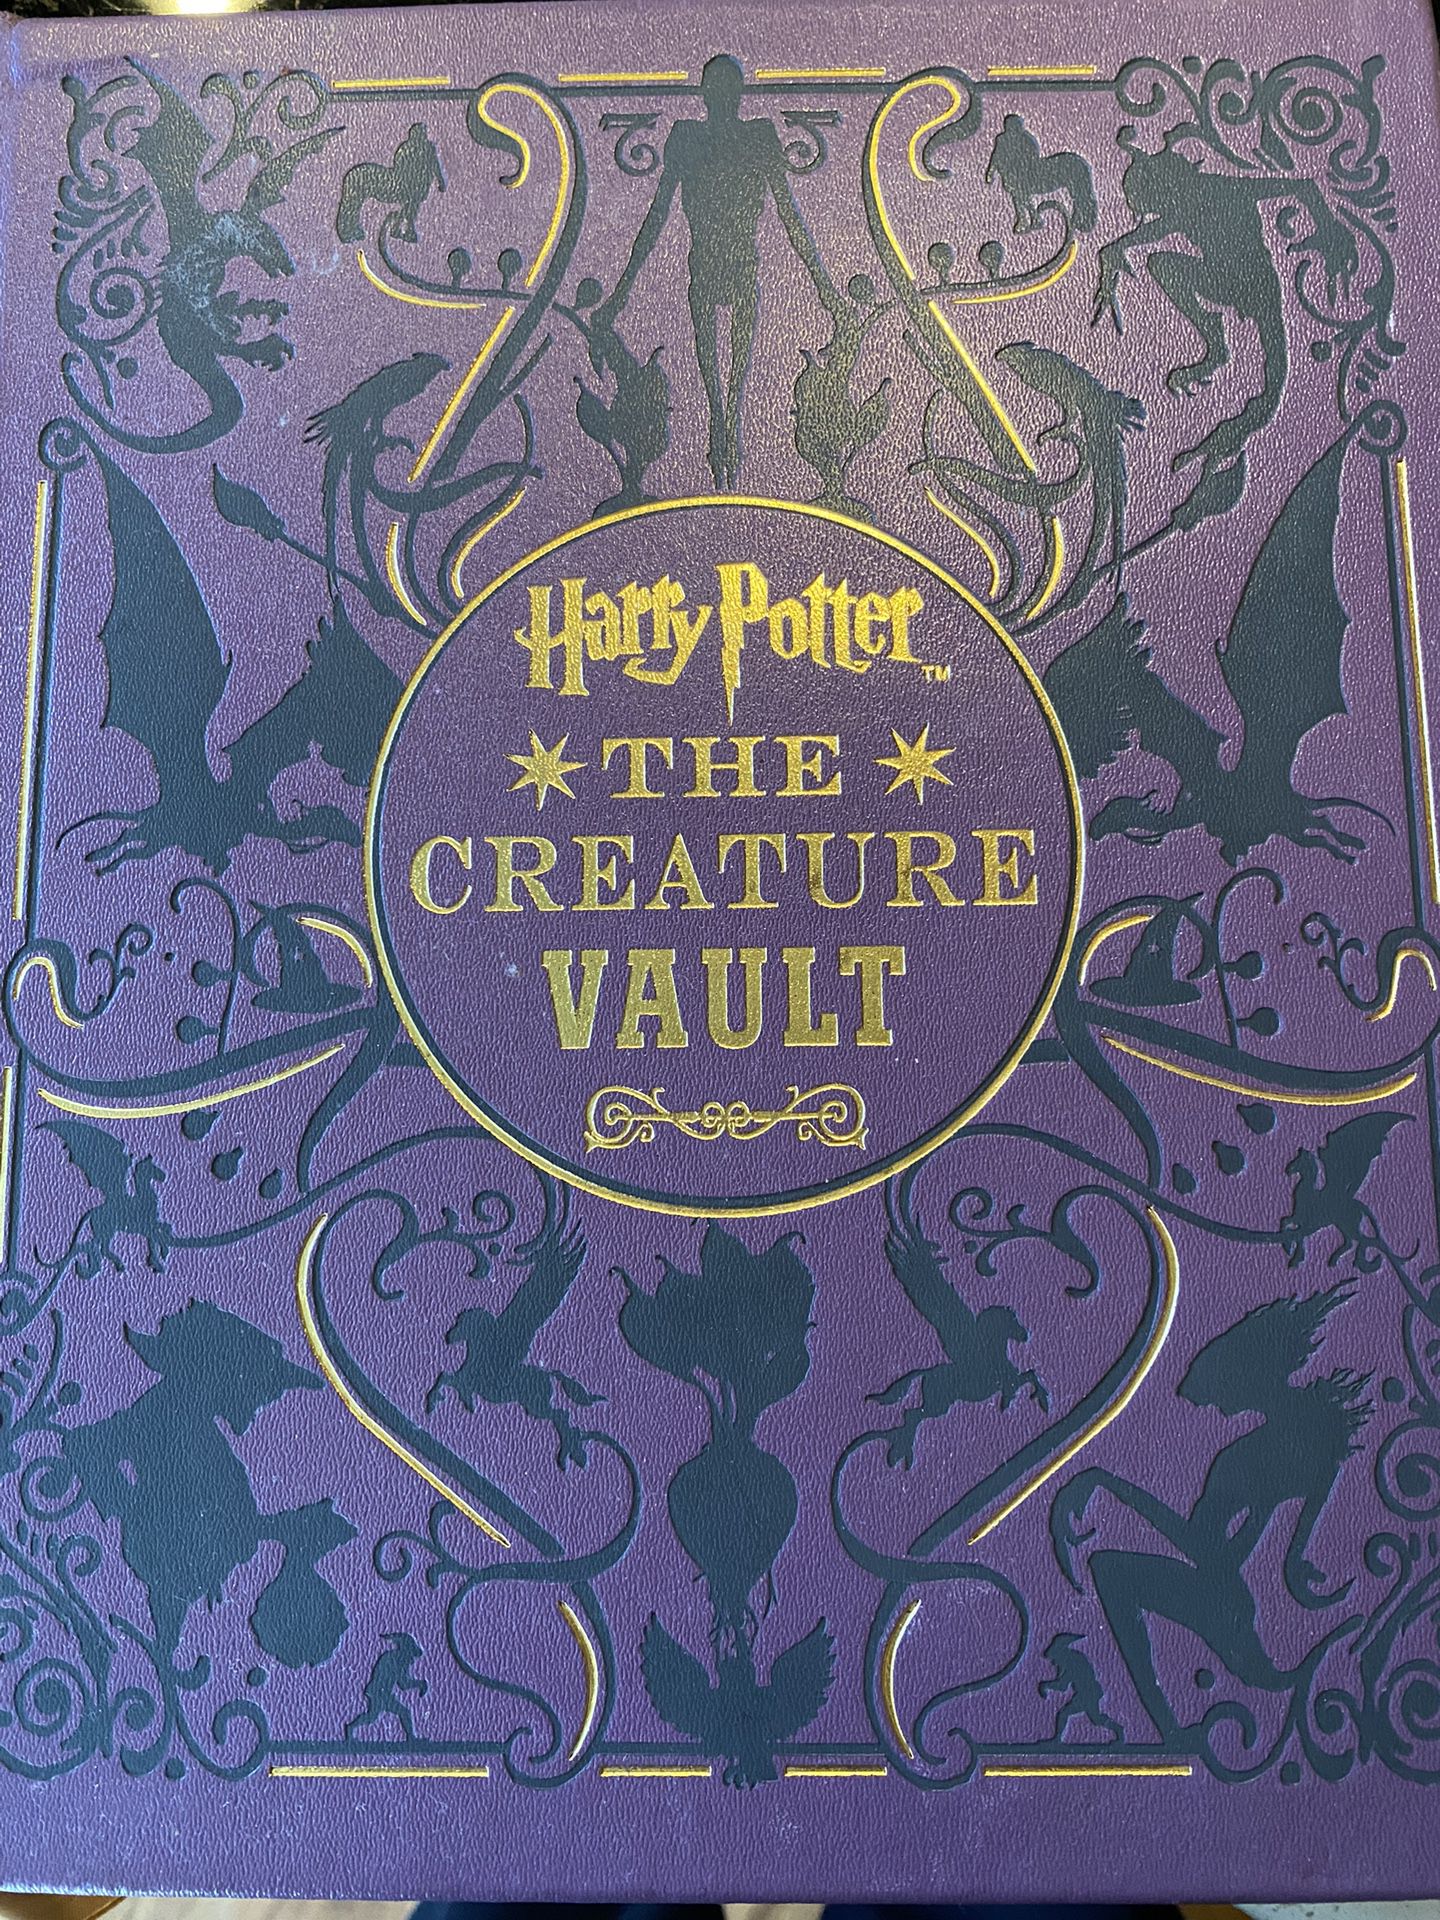 Harry Potter the creature vault Book